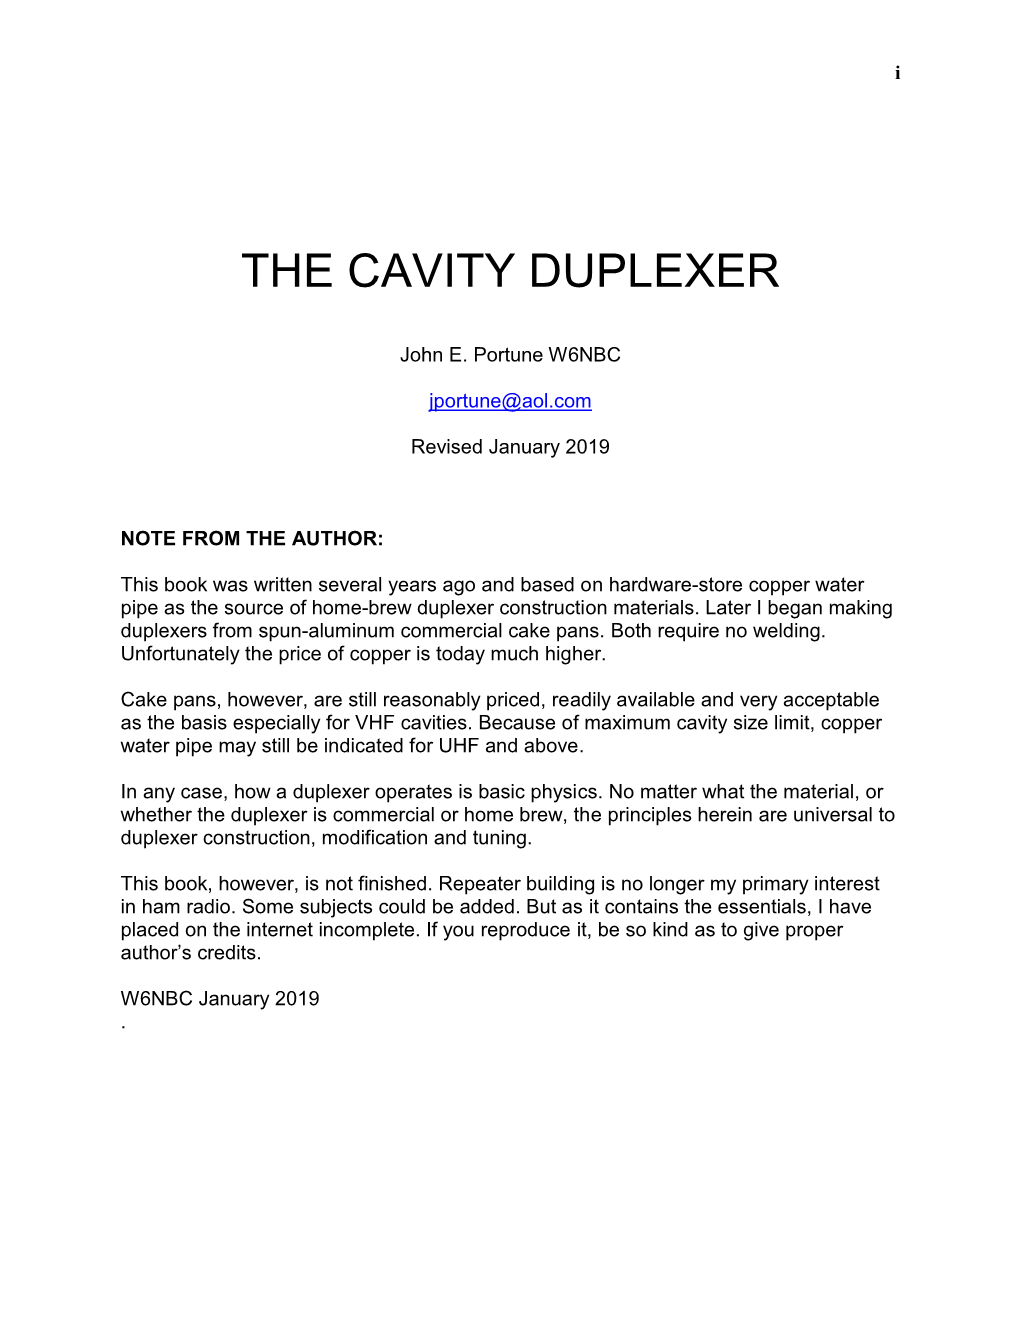 The Cavity Duplexer